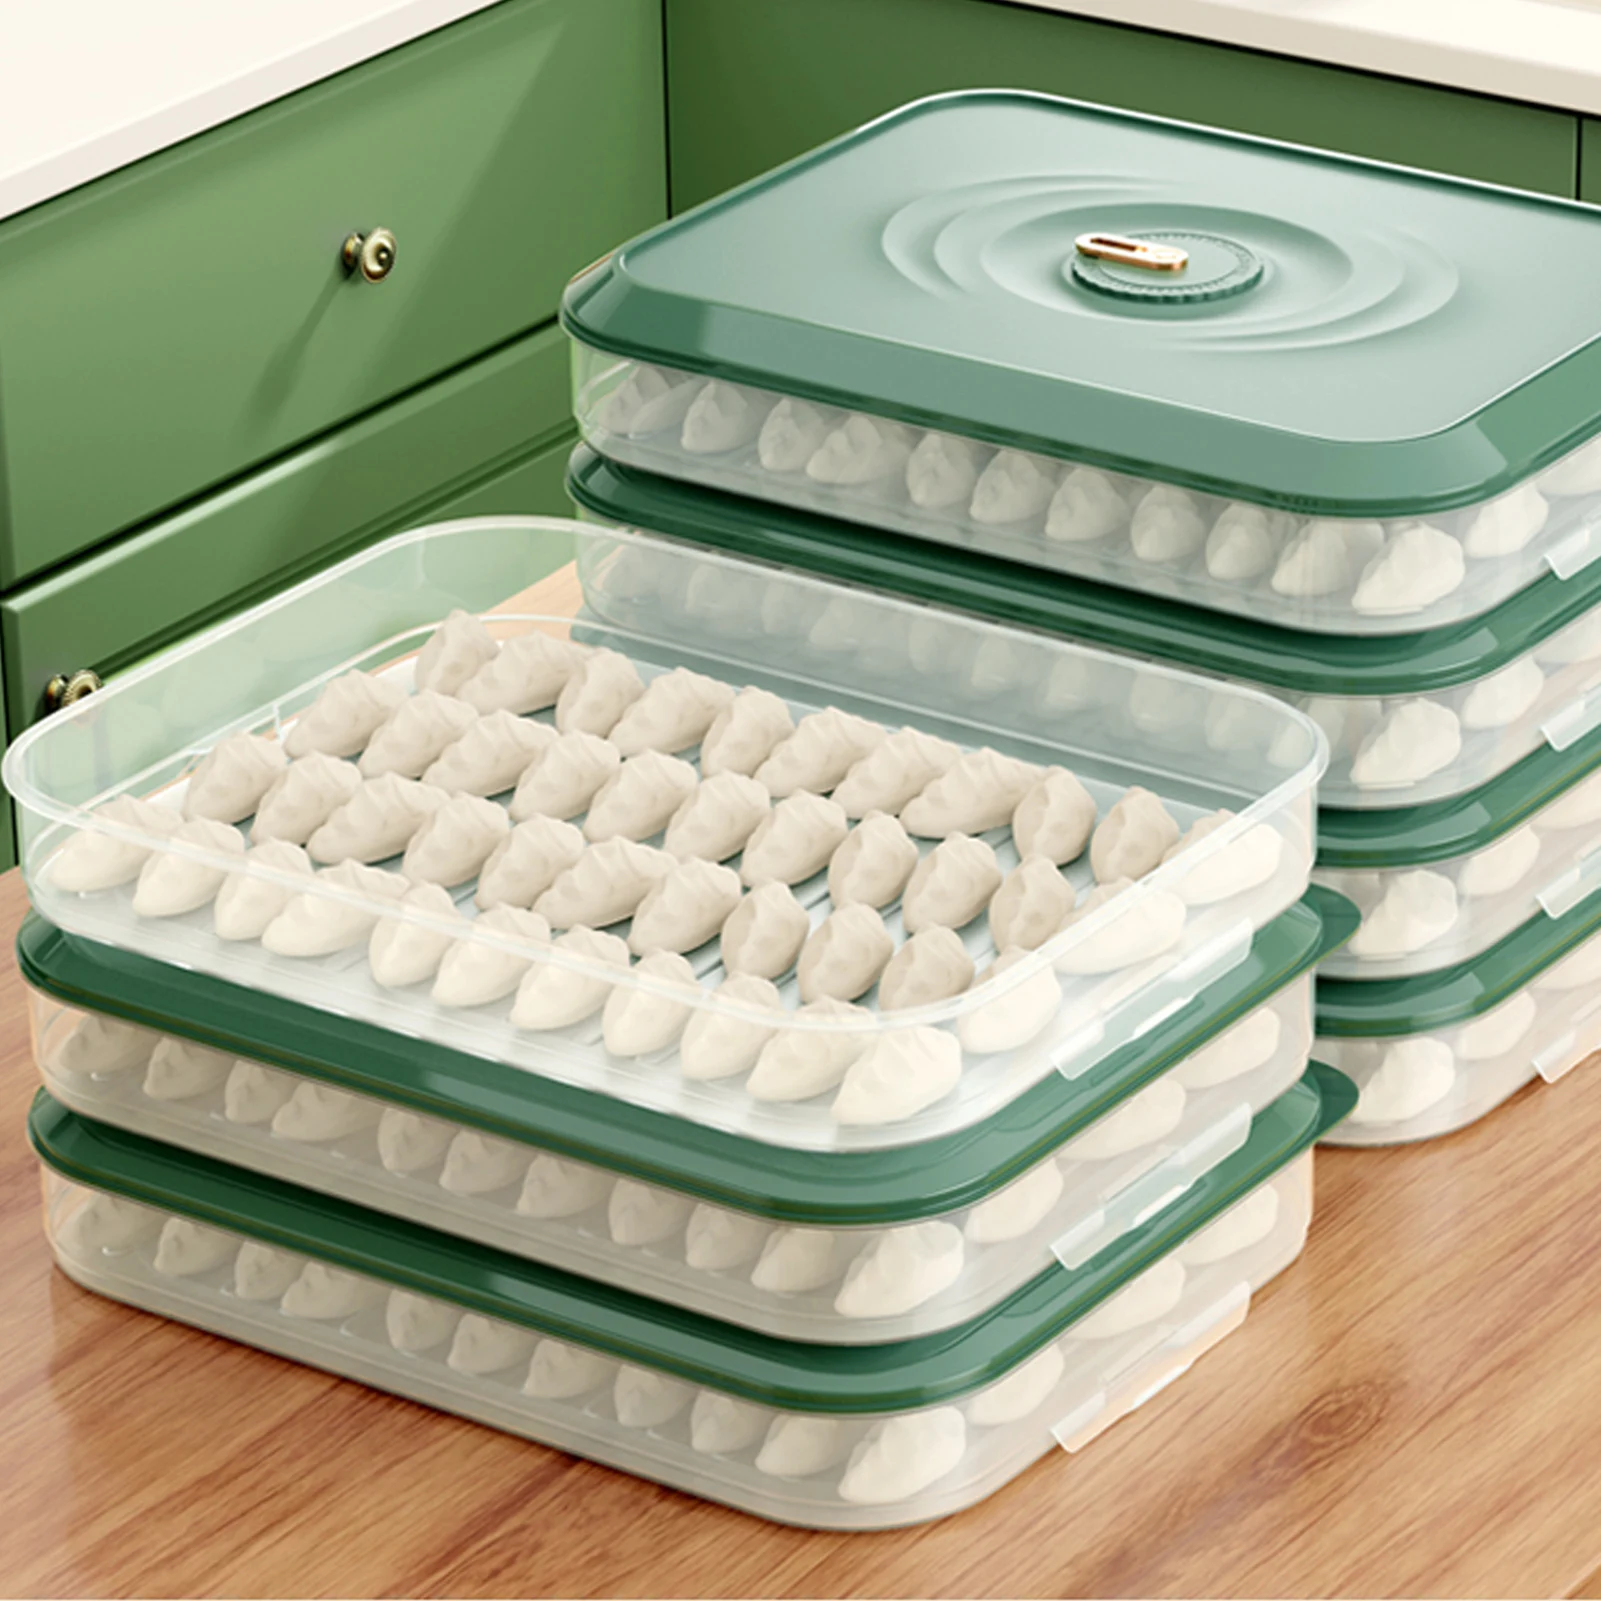 

Frozen Food Storage Containers Stackable Refrigerator Organizer Keeper With Lids Large Capacity Fridge Crisper Dumpling Box